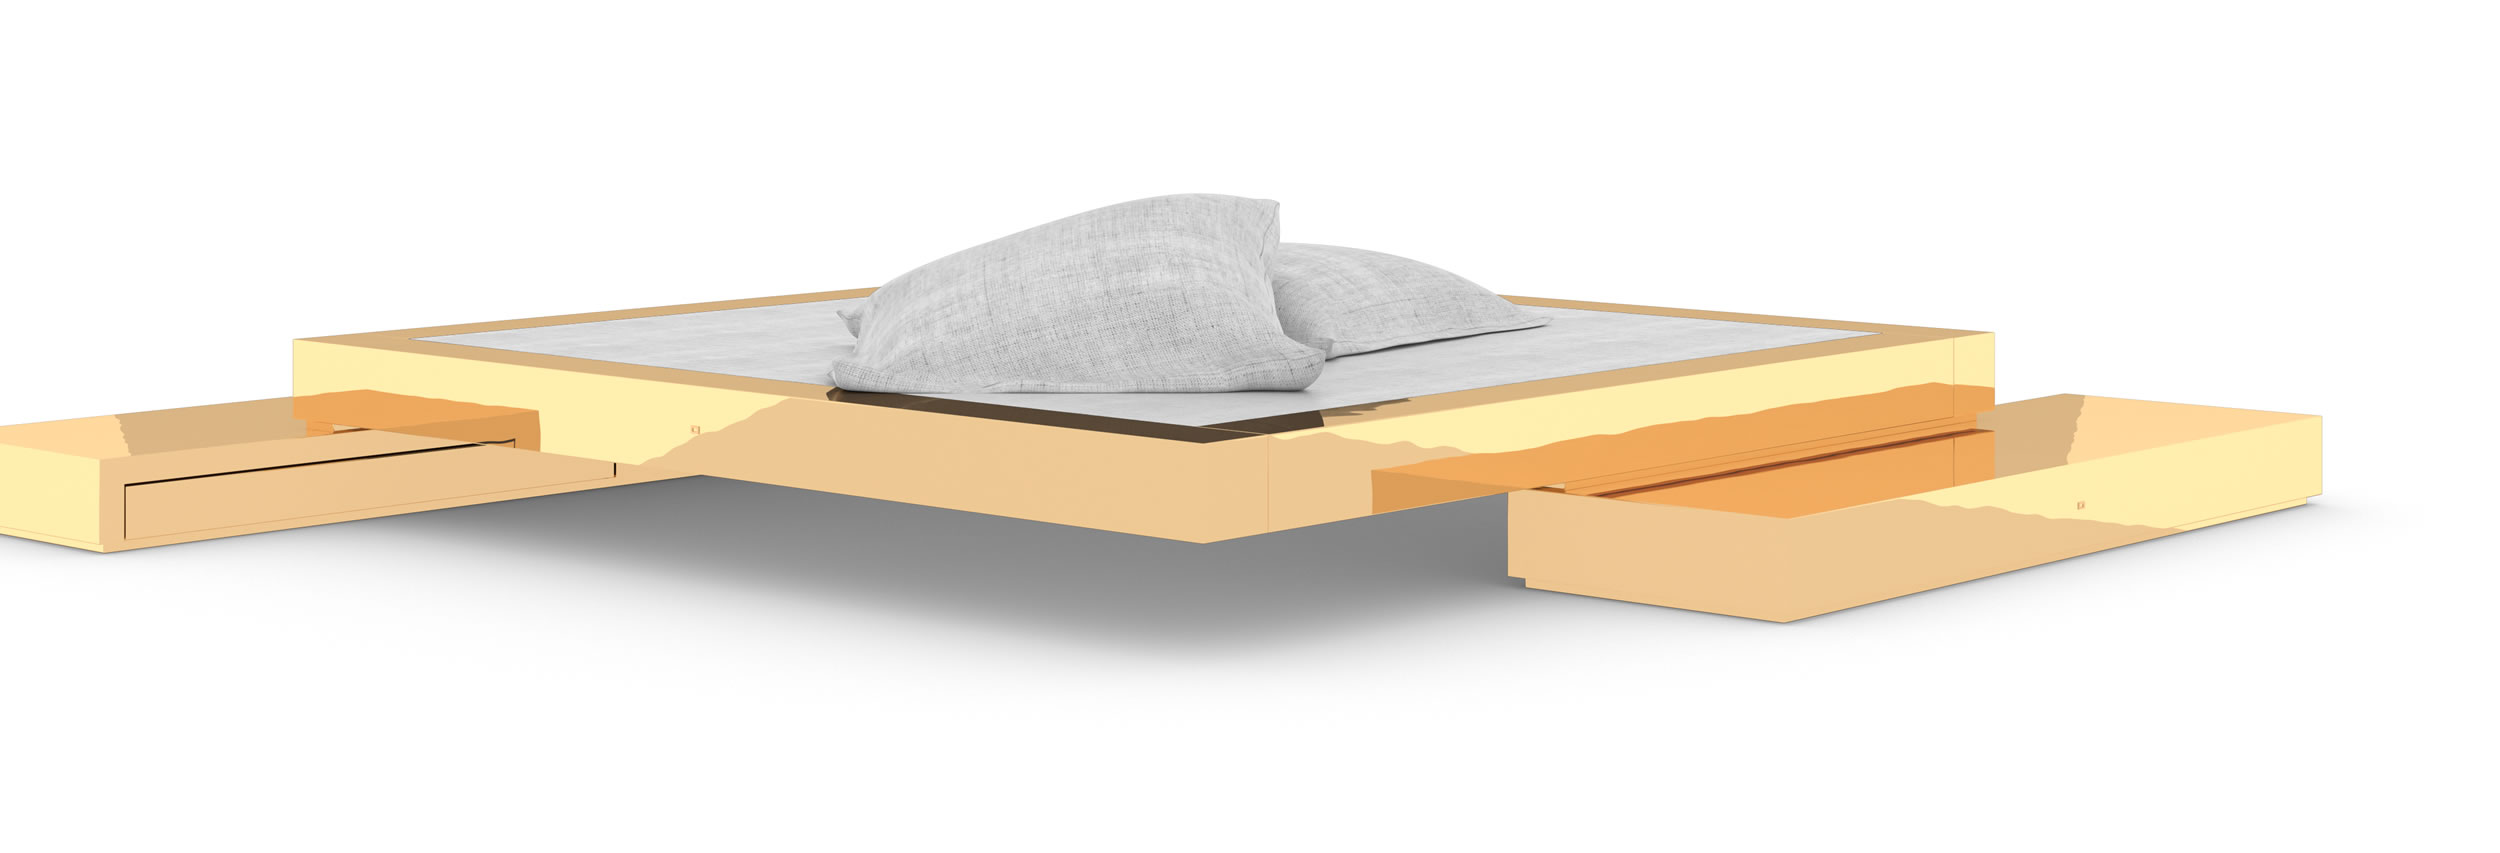 Design Bed Sideboards Exclusive Gold Handcrafted Luxury Unique Purist InteriorFELIX SCHWAKE